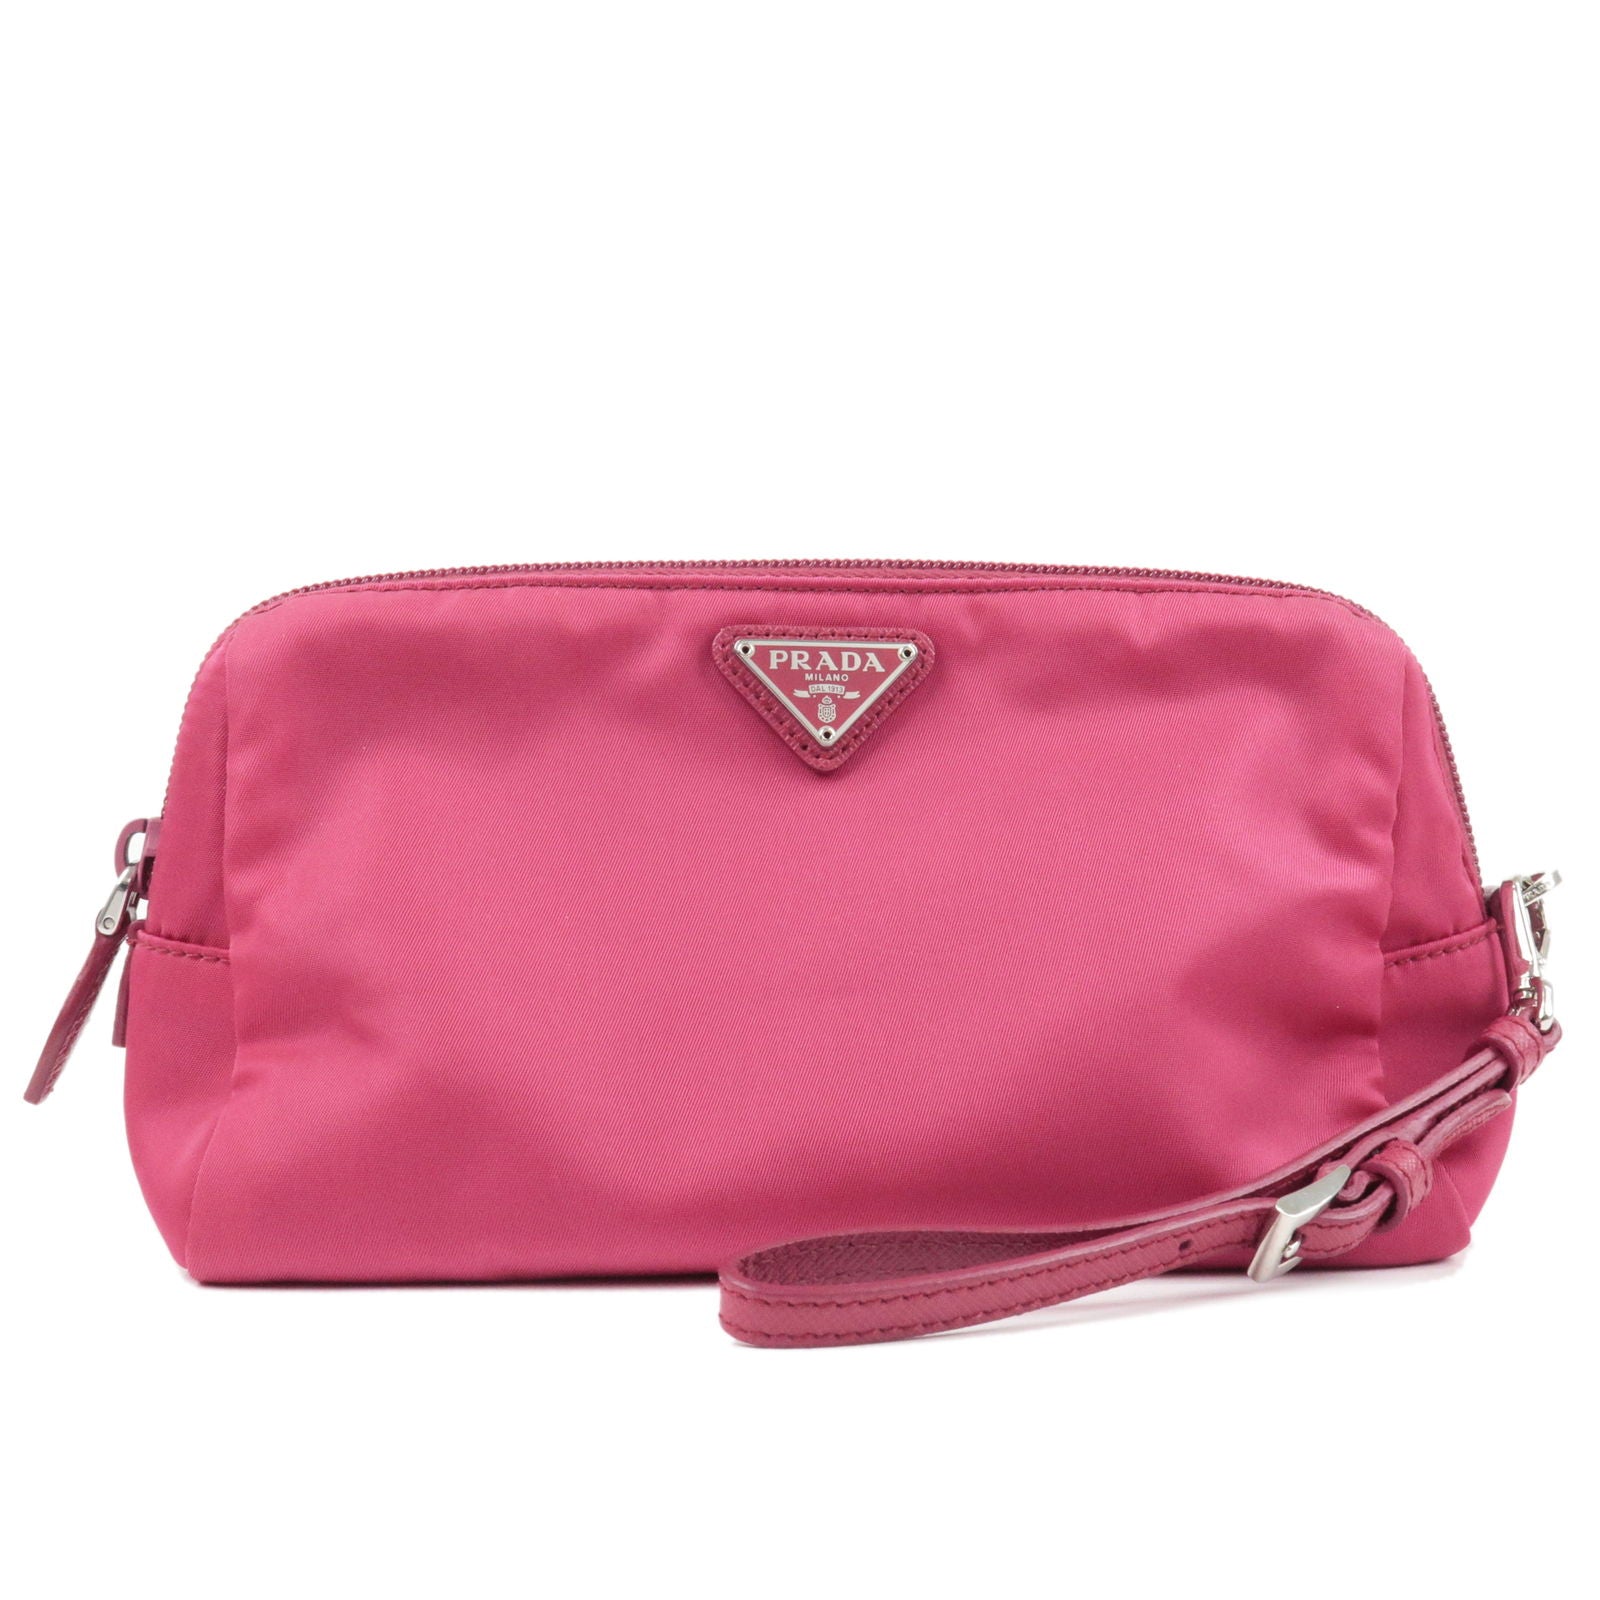 Pink – Prada Flip Flops for Women - Leather - Prada enamel logo plaque  button-down shirt - Nylon - 1NE693 - Pouch - Logo - PRADA - Cosmetic - Pouch